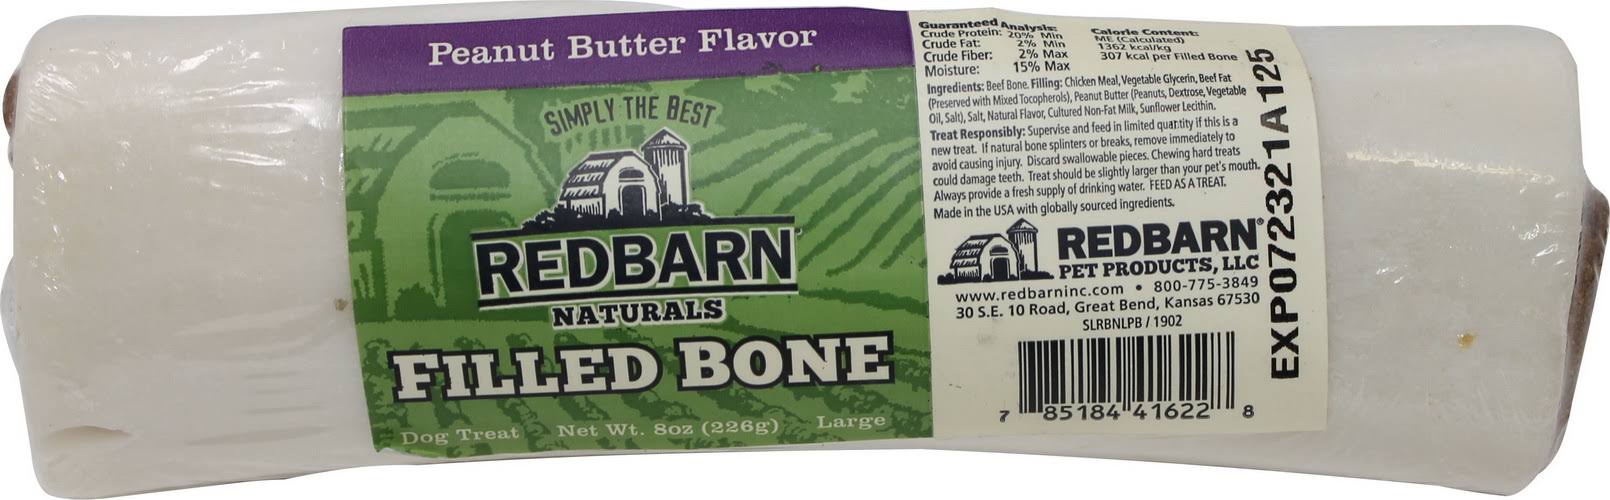 Redbarn Naturals Peanut Butter Filled Bone Dog Treats - 8oz